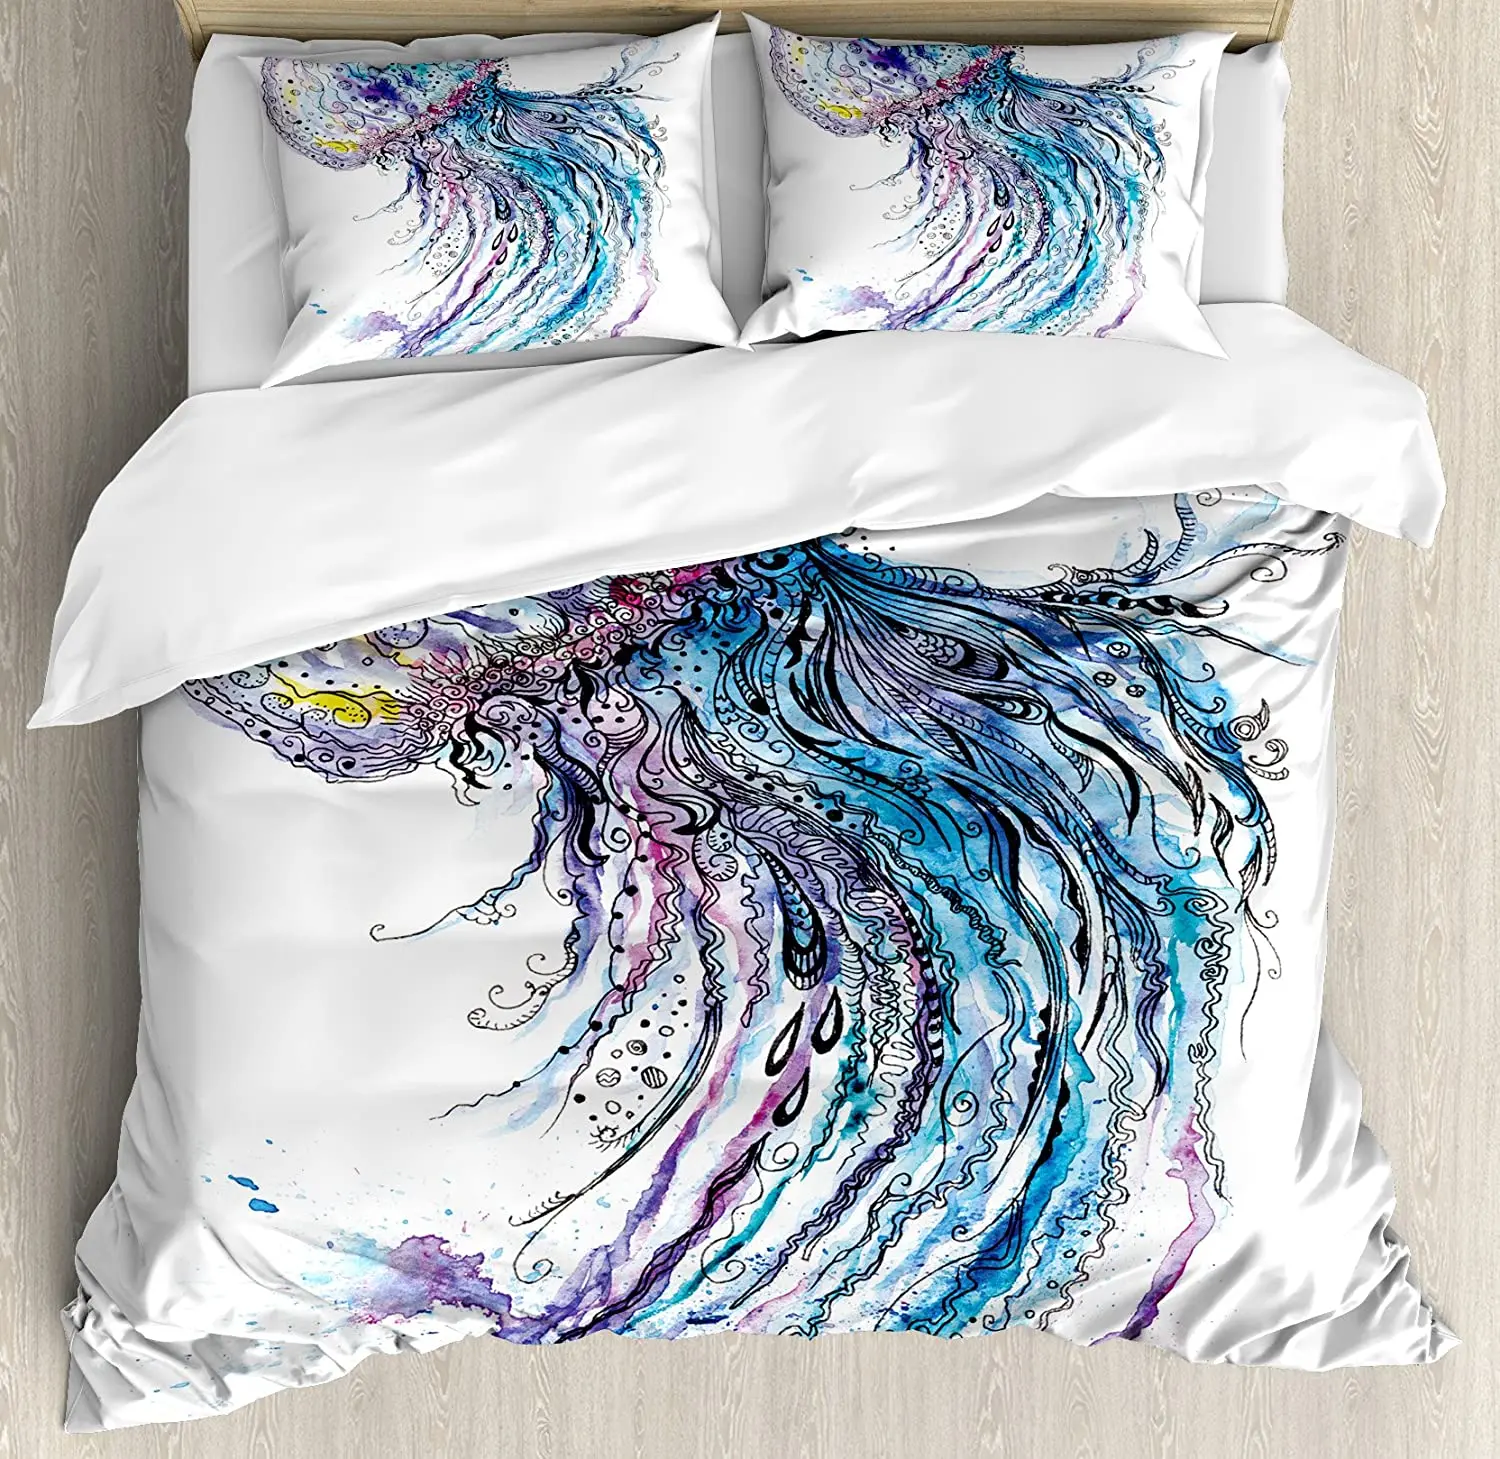 

Jellyfish Double Bed Duvet Cover Set Aqua Colors Art Ocean Animal Print Sketch Style Creative Sea Marine Theme Bedding Set